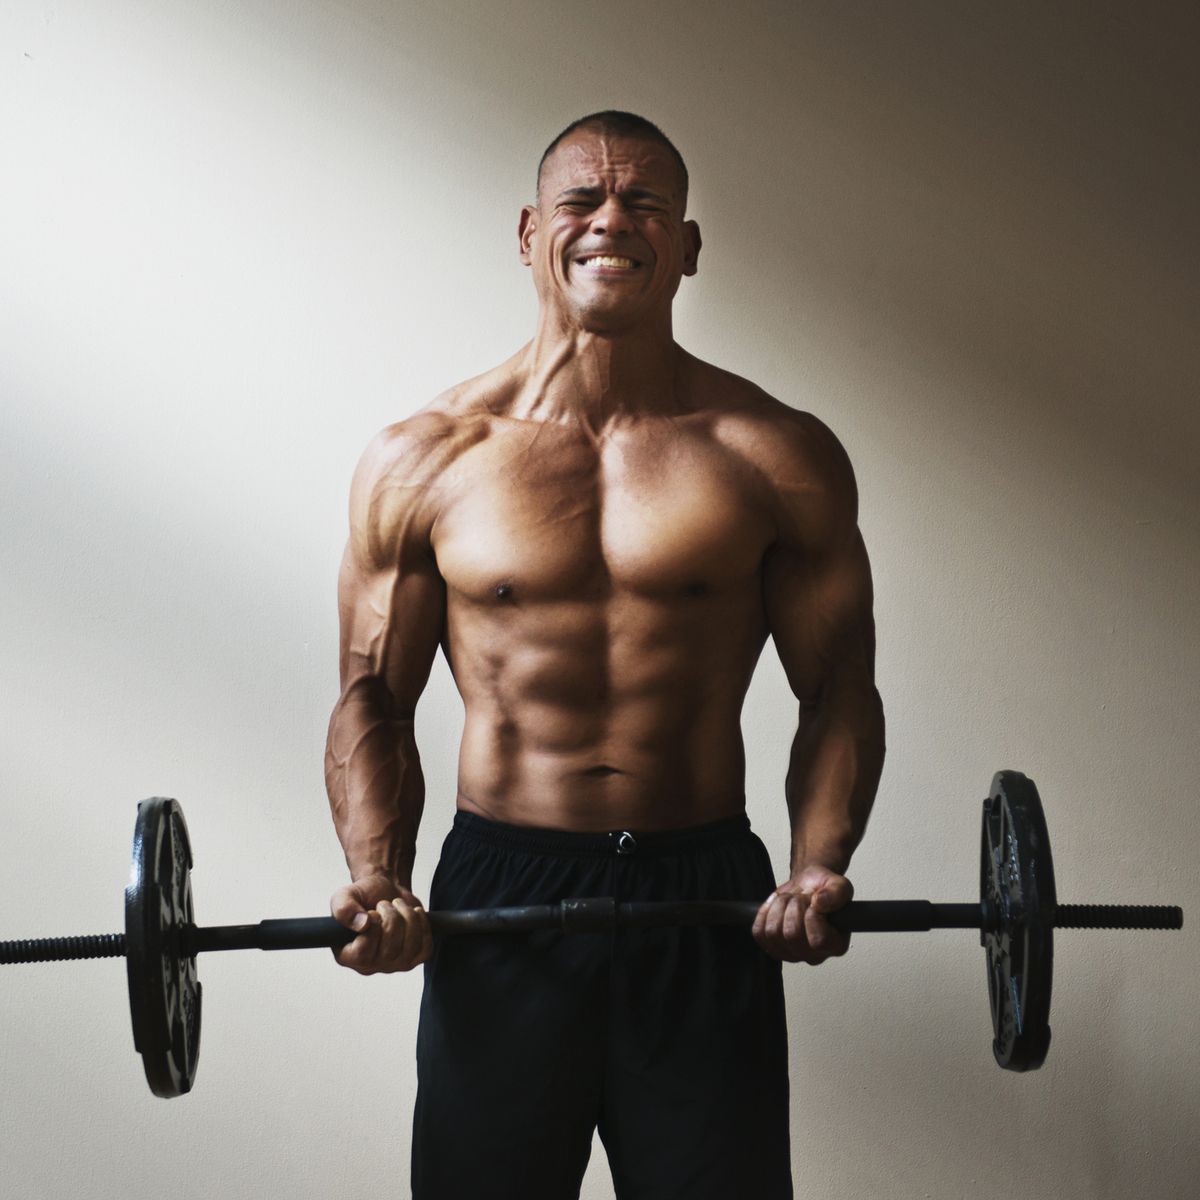 Hispanic athlete lifting weights